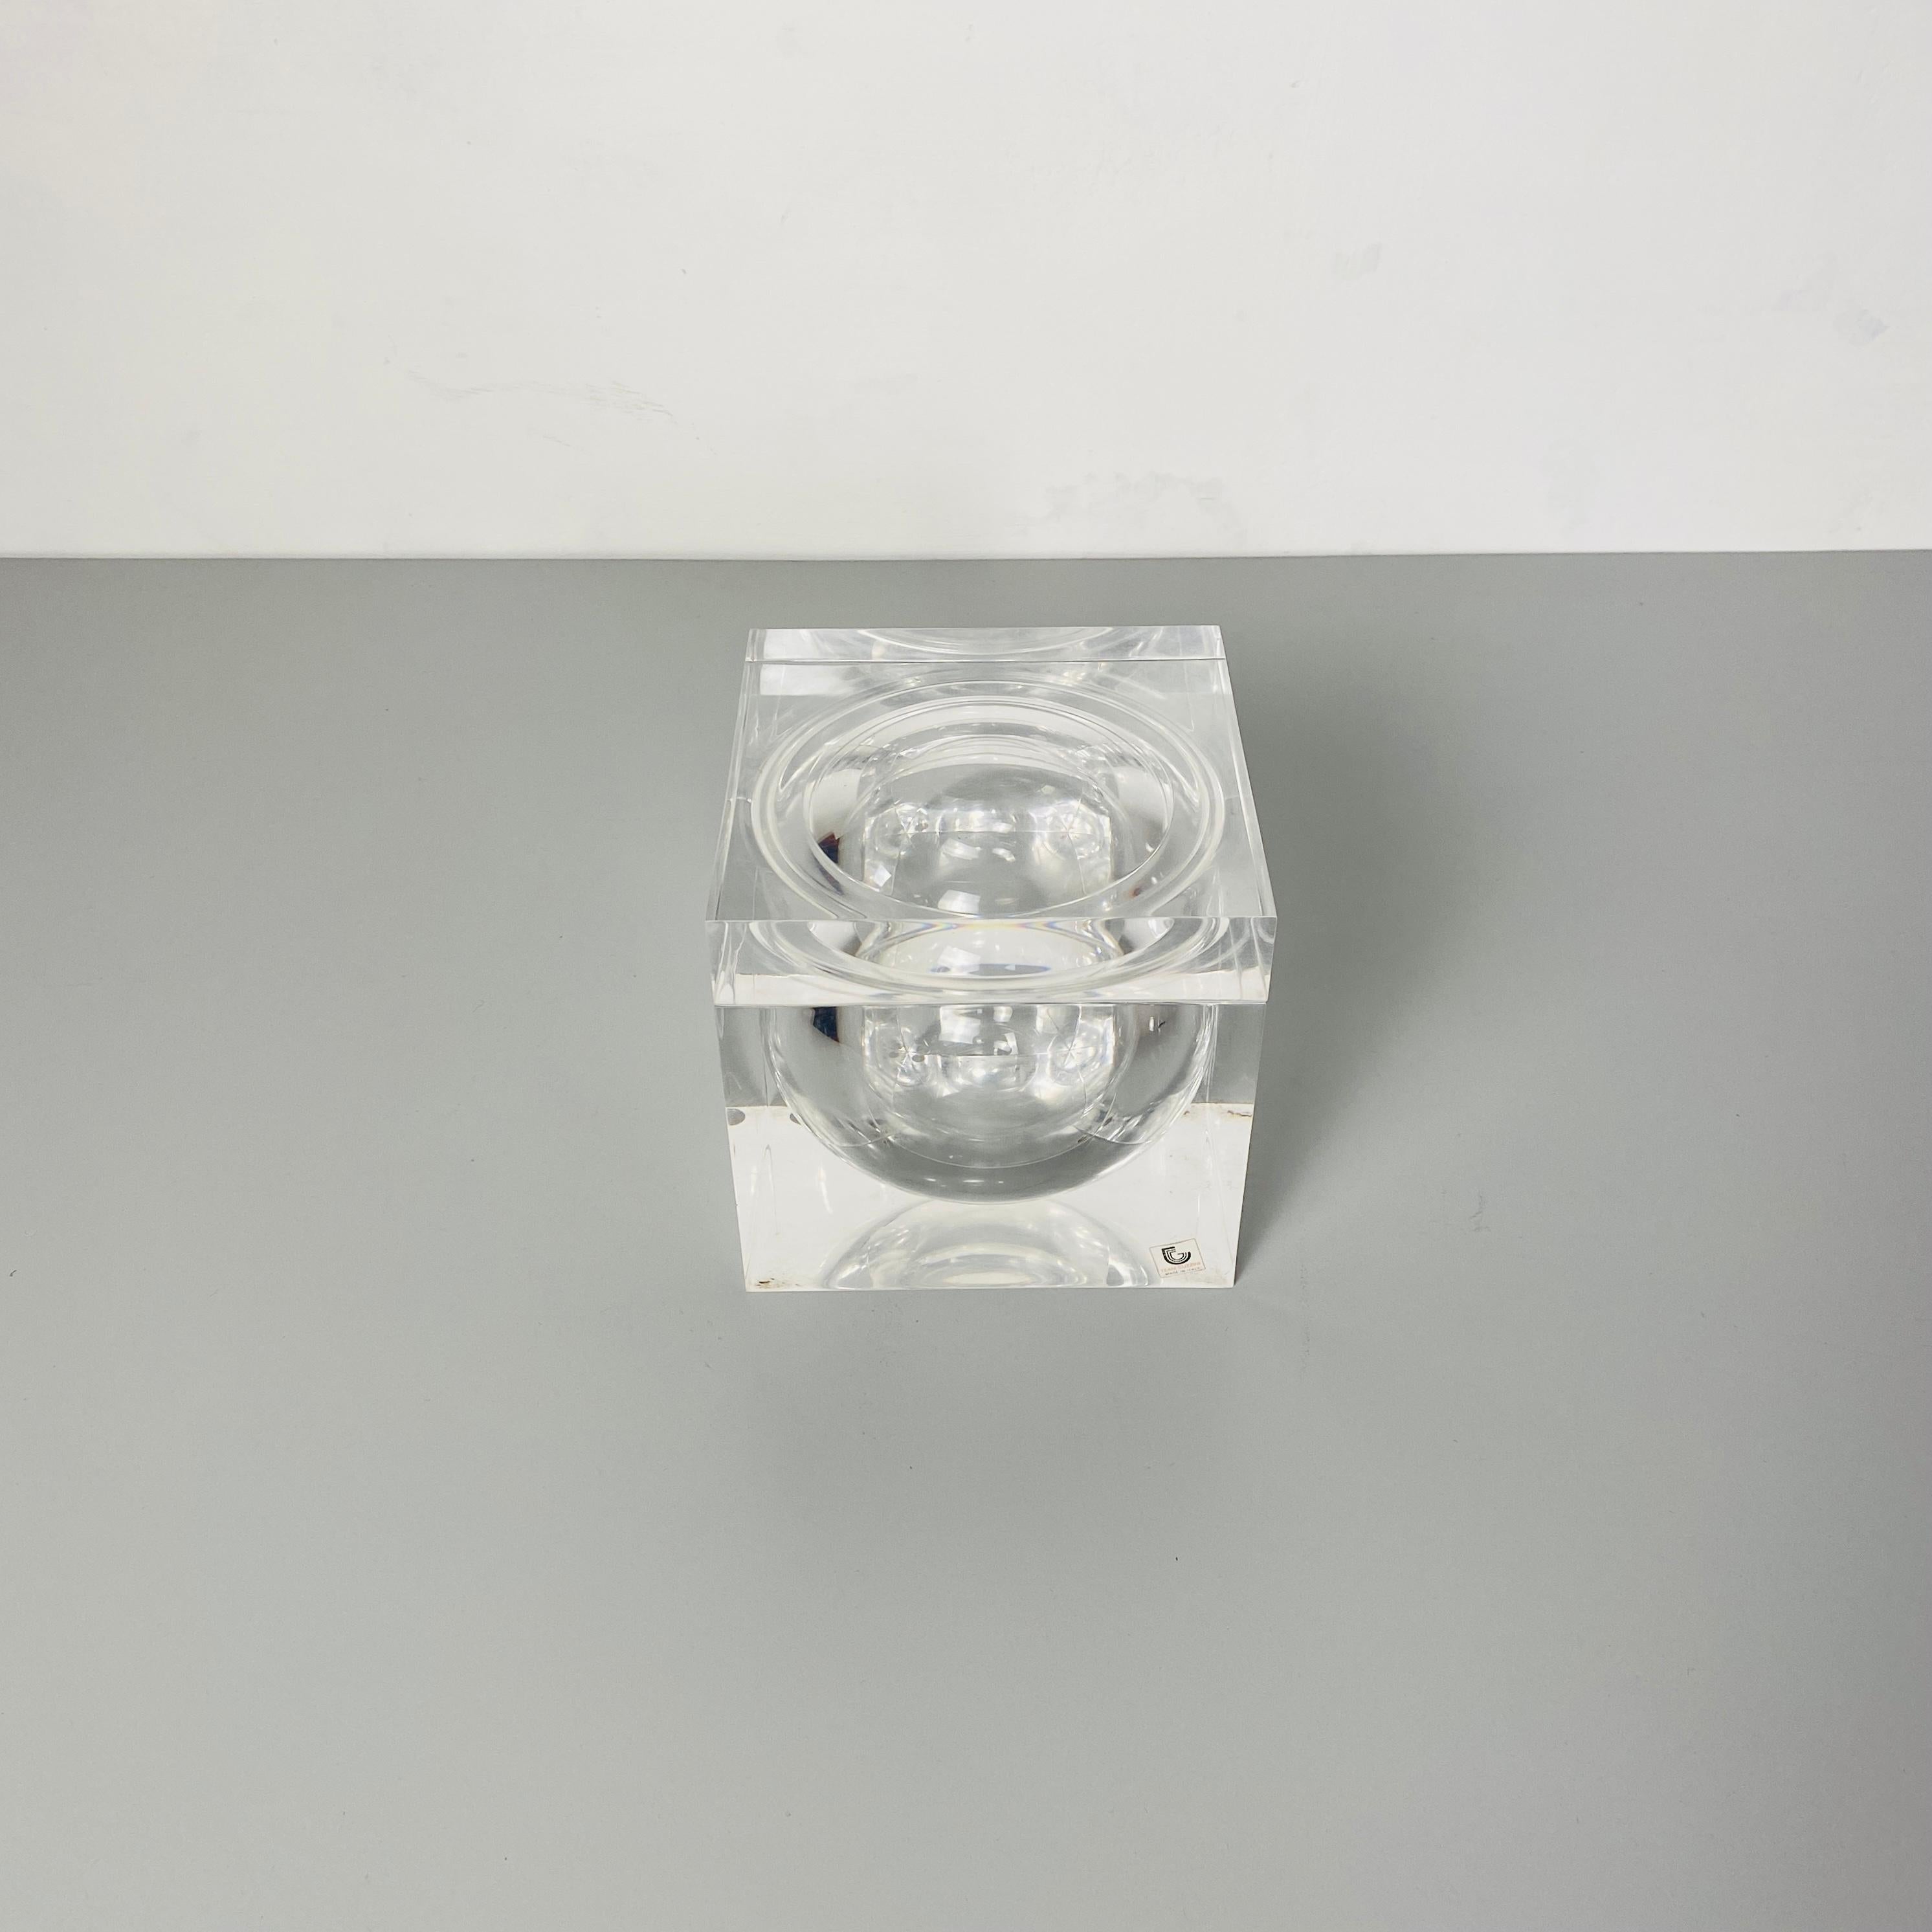 Late 20th Century Italian Plexiglass Square Box with Internal Ice Bucket Sphere by Guzzini, 1970s